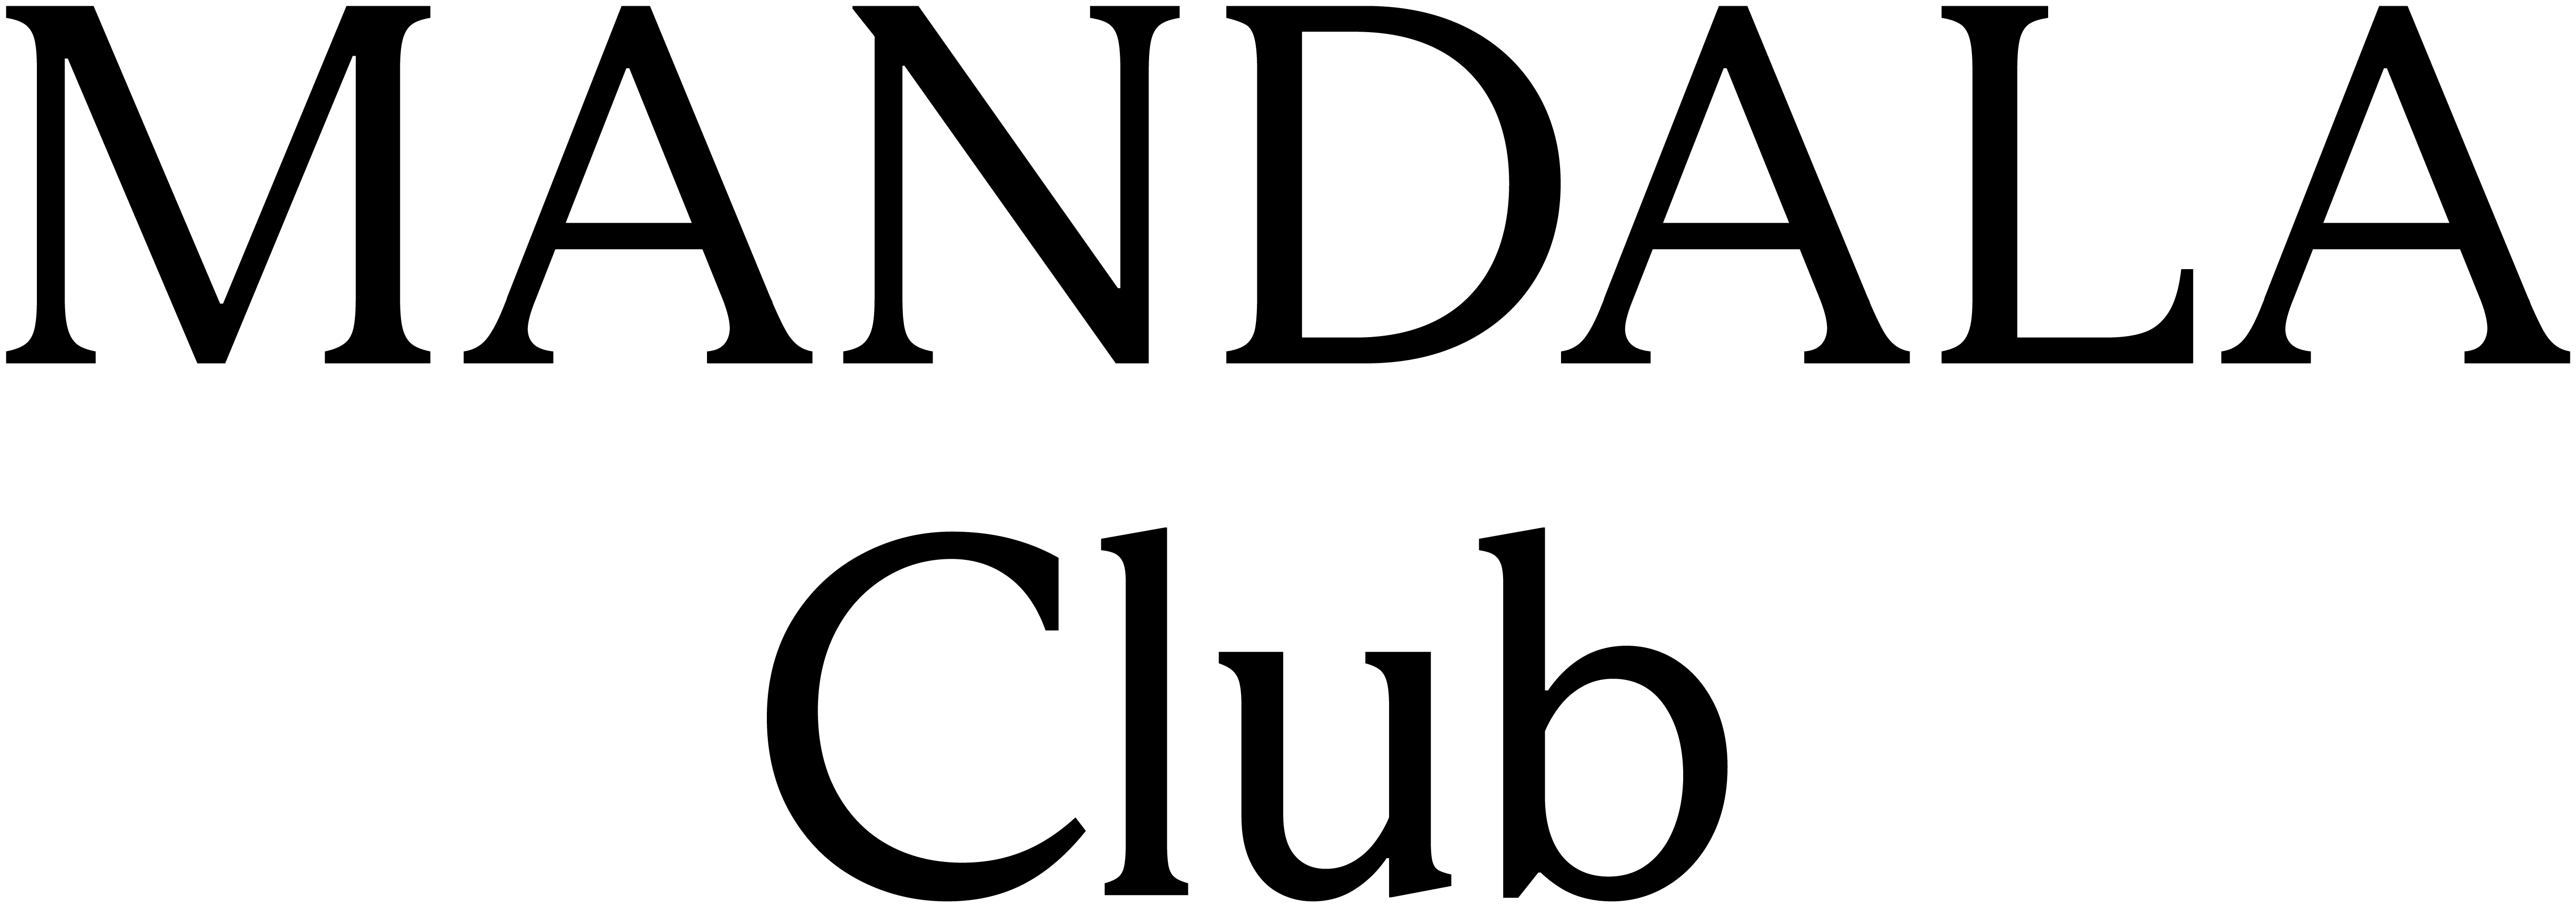 Mc logo black type